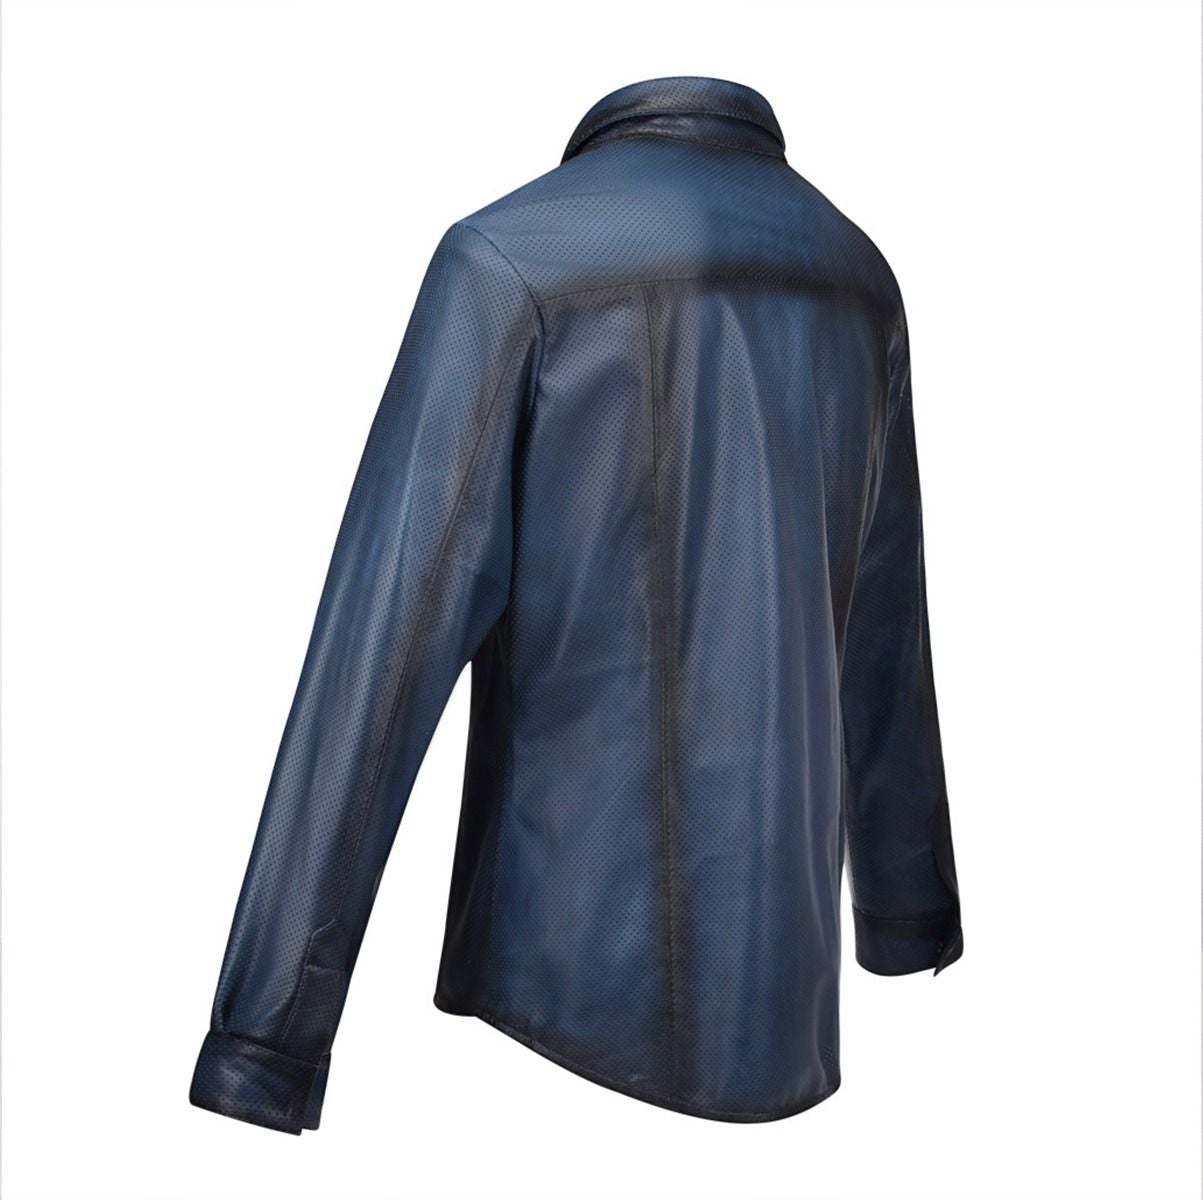 H265COC - Cuadra denim blue western fashion leather shirt jacket for men-CUADRA-Kuet-Cuadra-Boots